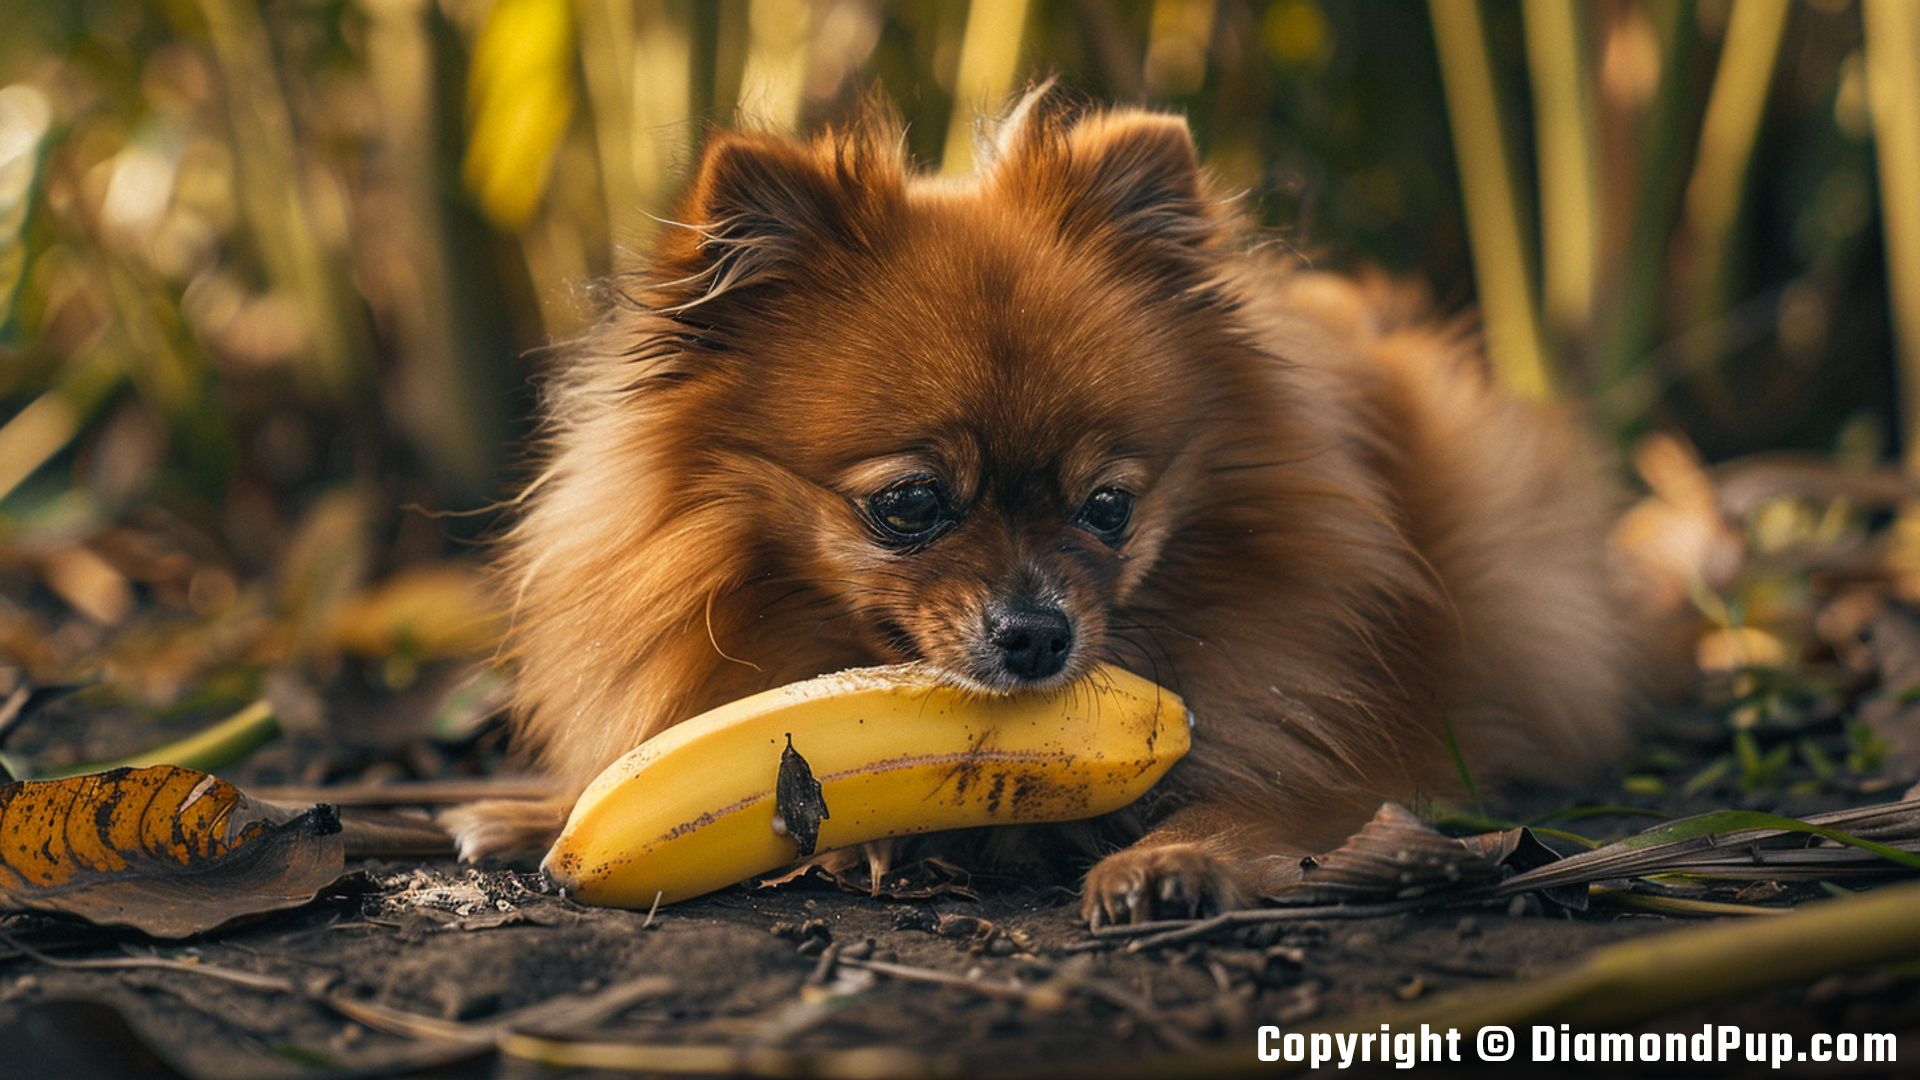 Image of a Cute Pomeranian Snacking on Banana